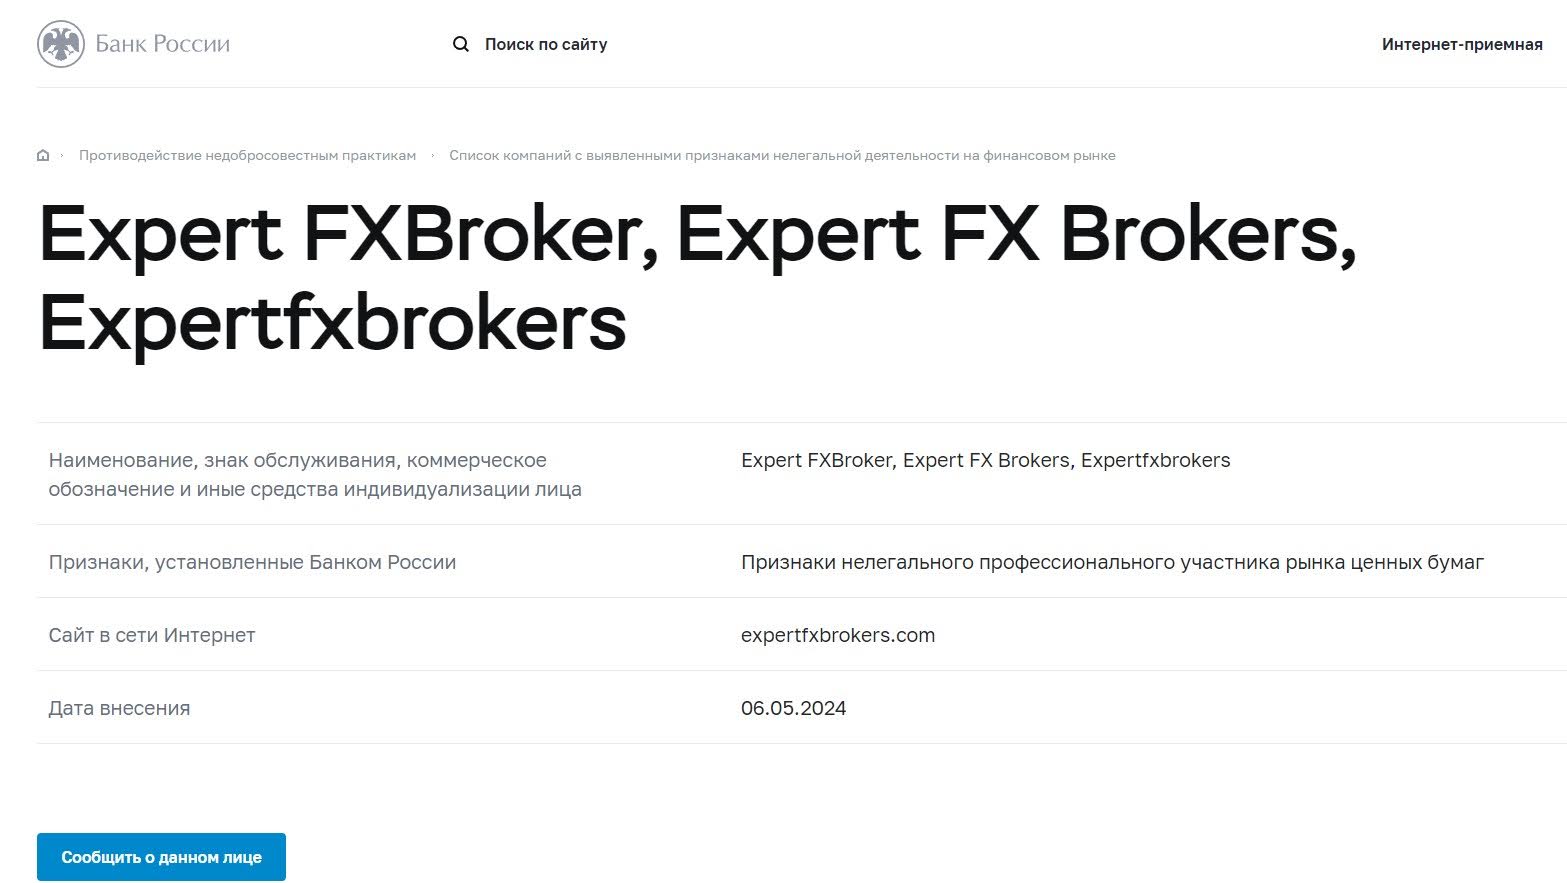 Expert FX Brokers сливная шарага